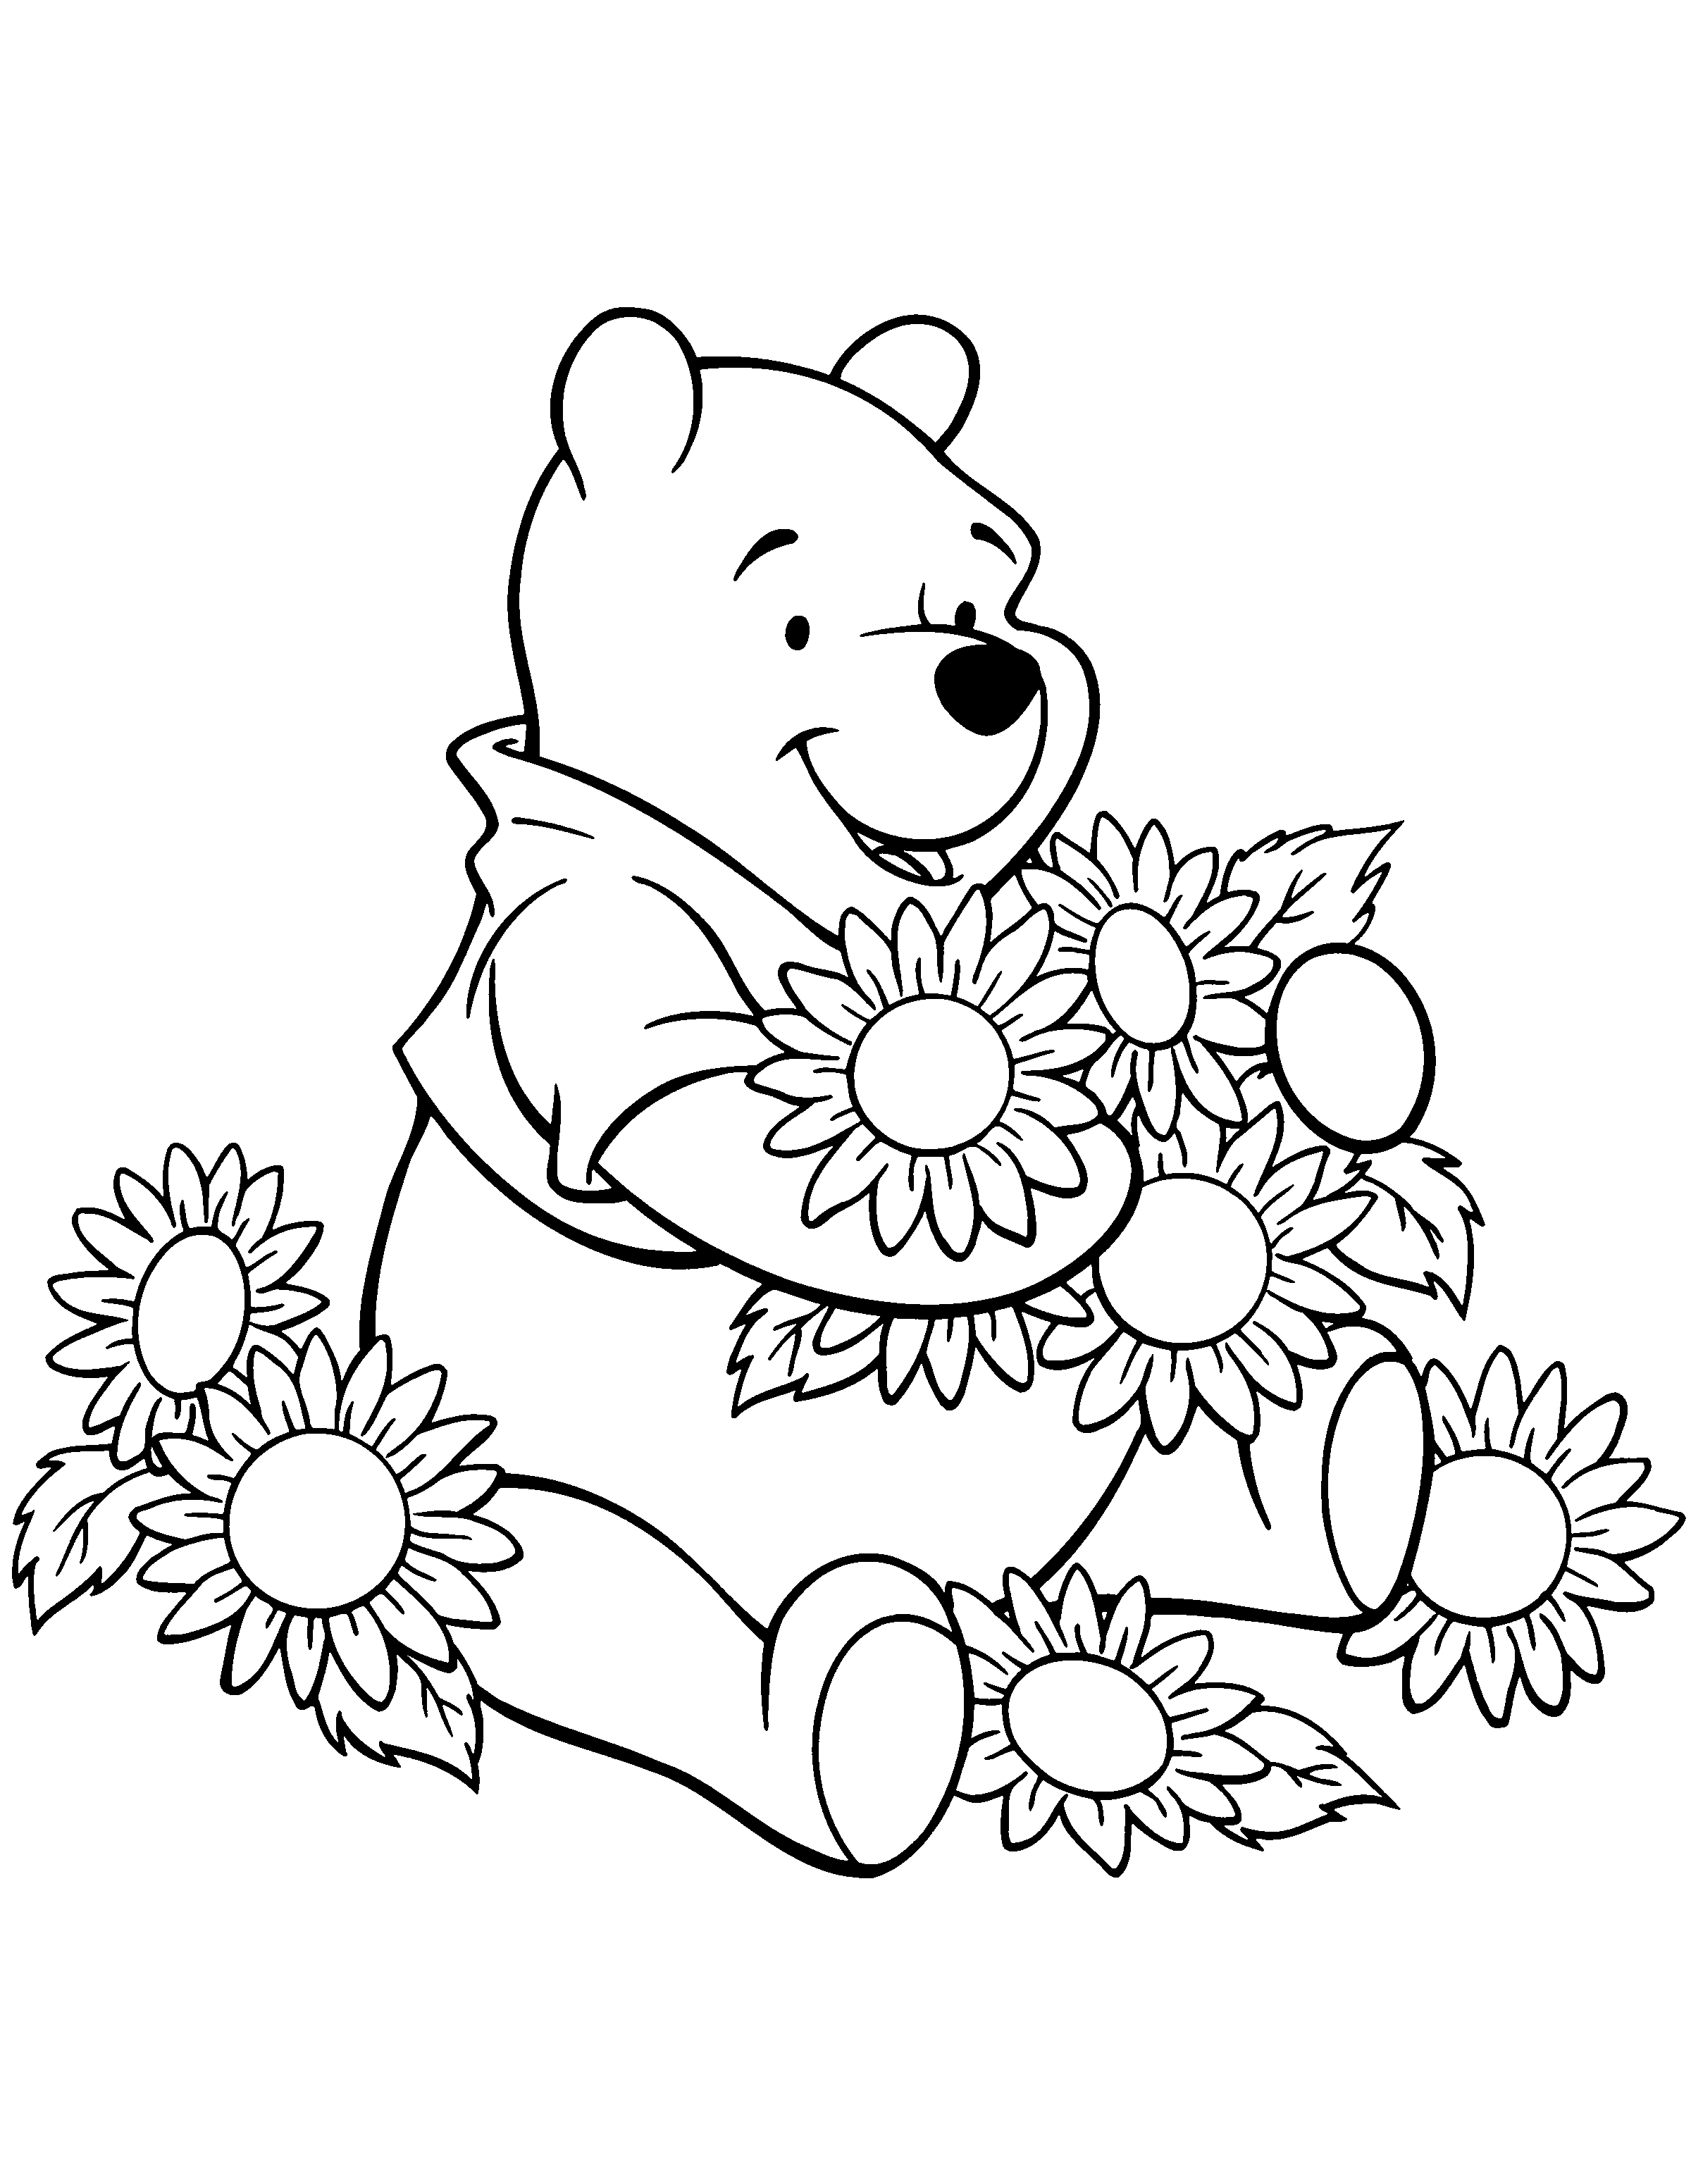 winnie the pooh coloring pages for kids disney - VoteForVerde.com